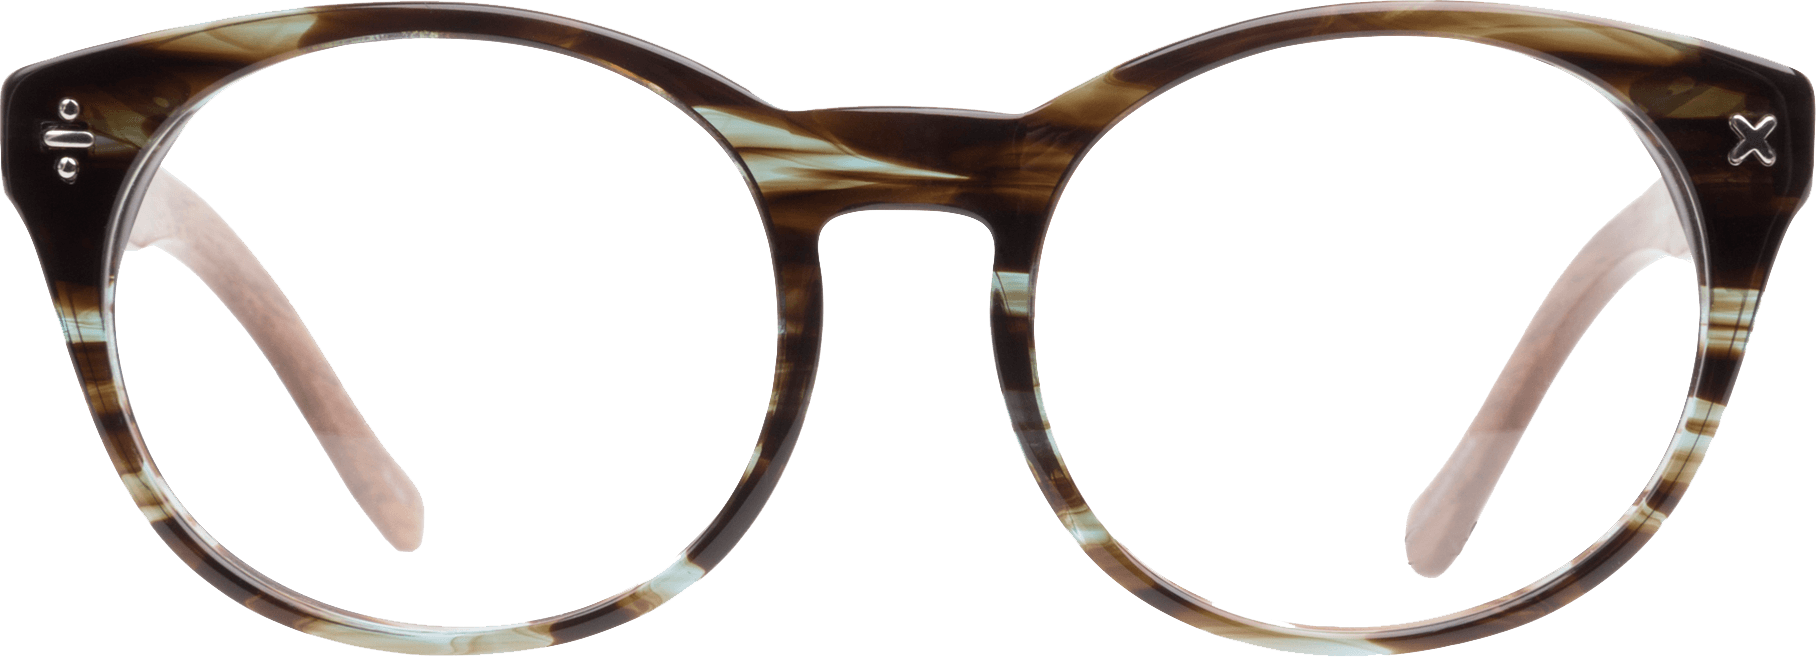 Round Frame Eyeglasses Png